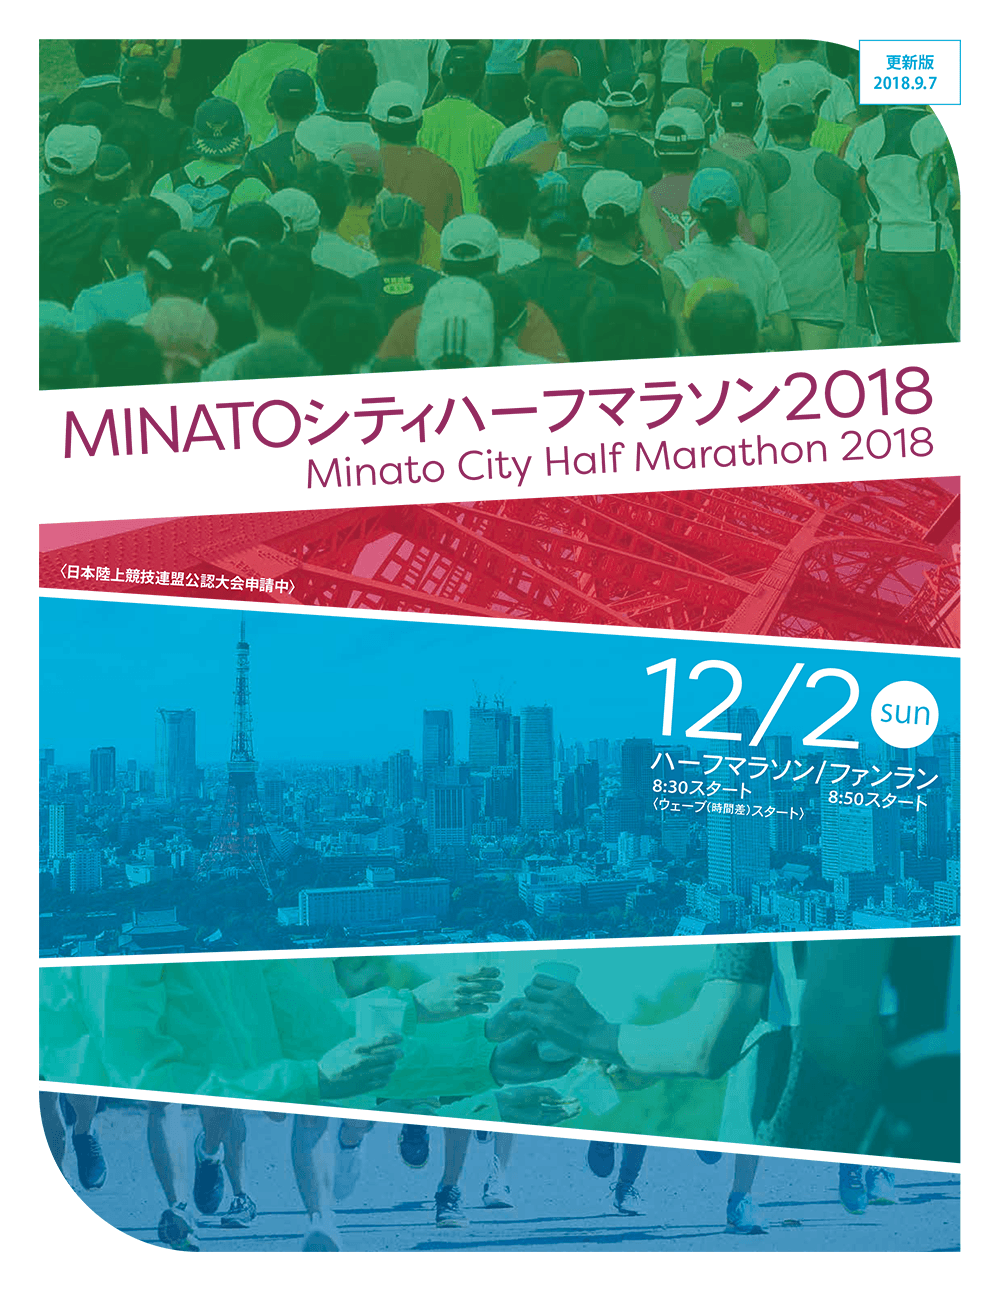 Minato City Half Marathon 2018